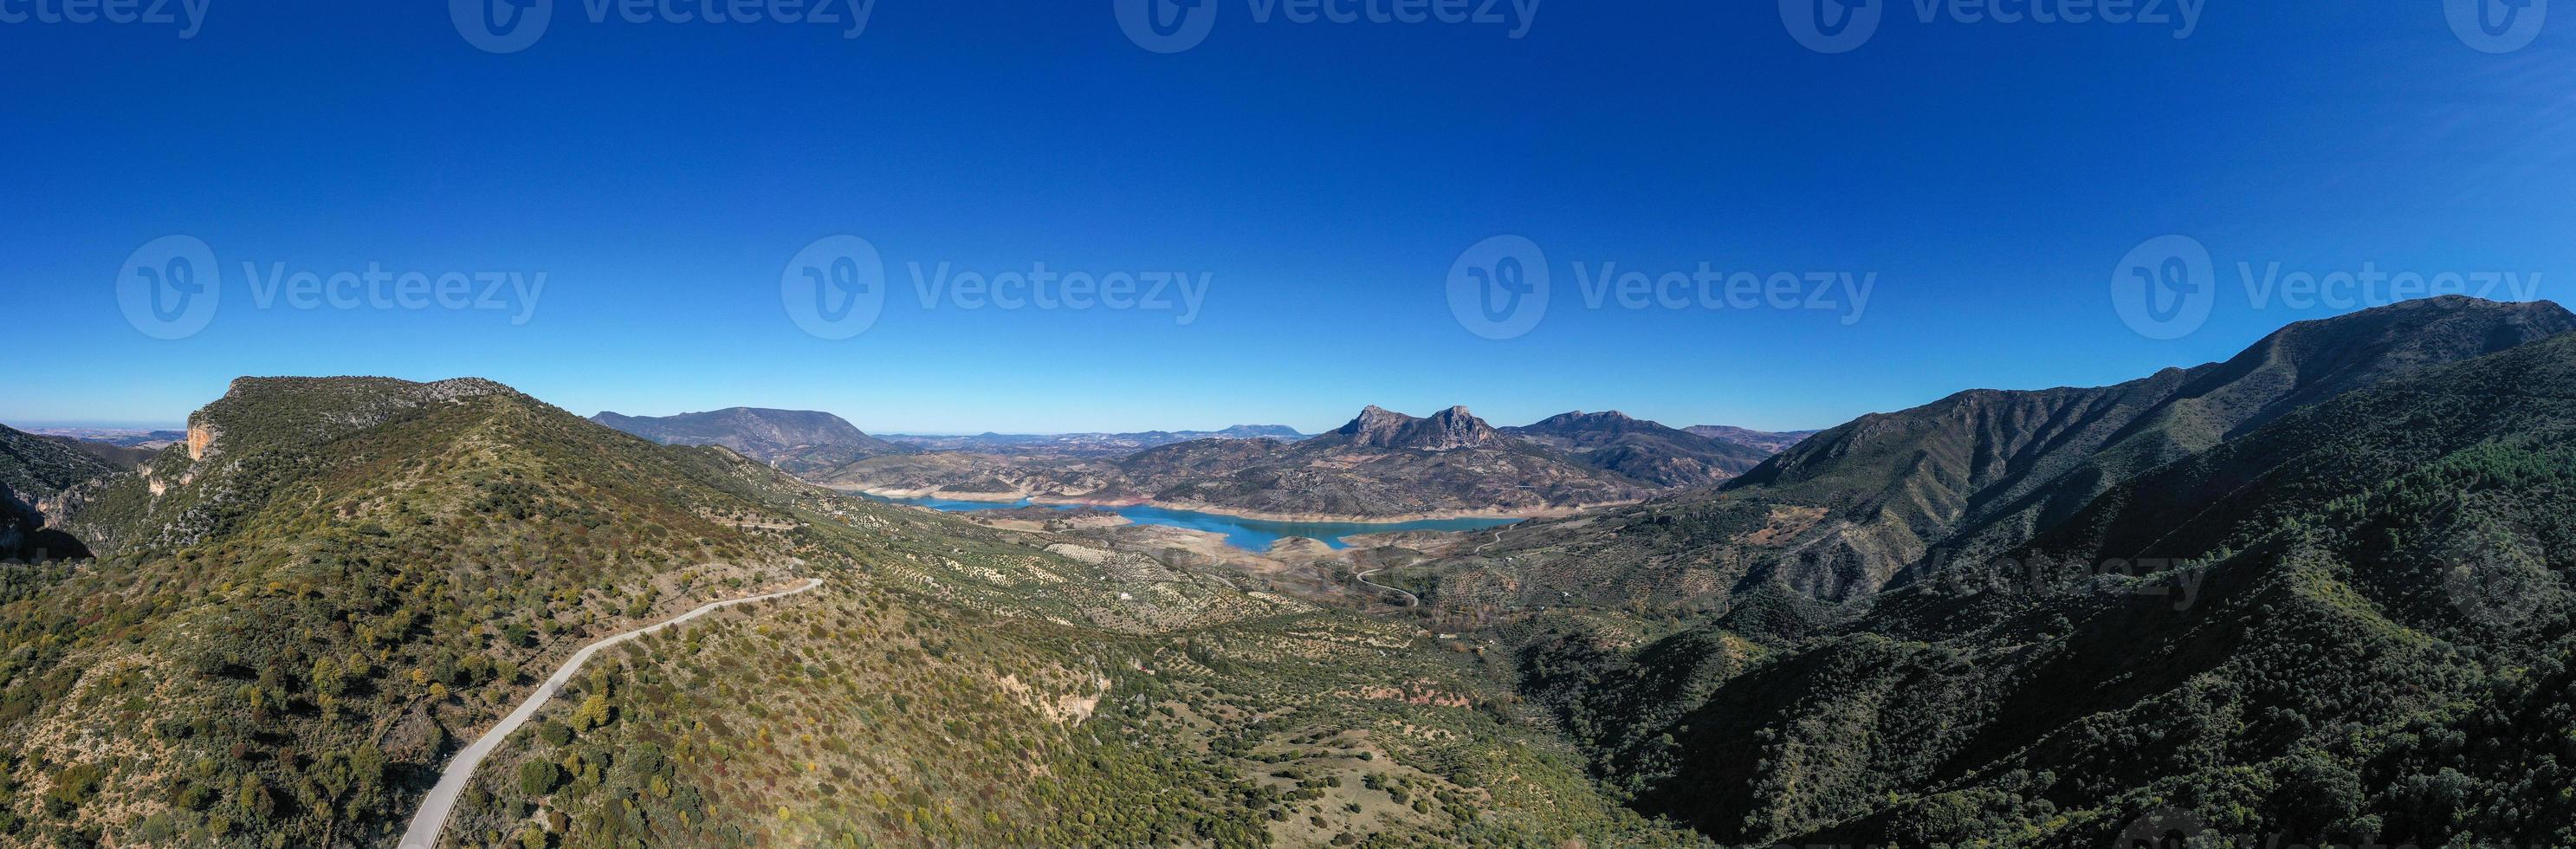 Blue lake in Zahara de la Sierra in Sierra de Grazalema natural park, Cadiz province, Malaga, Andalusia, Spain photo